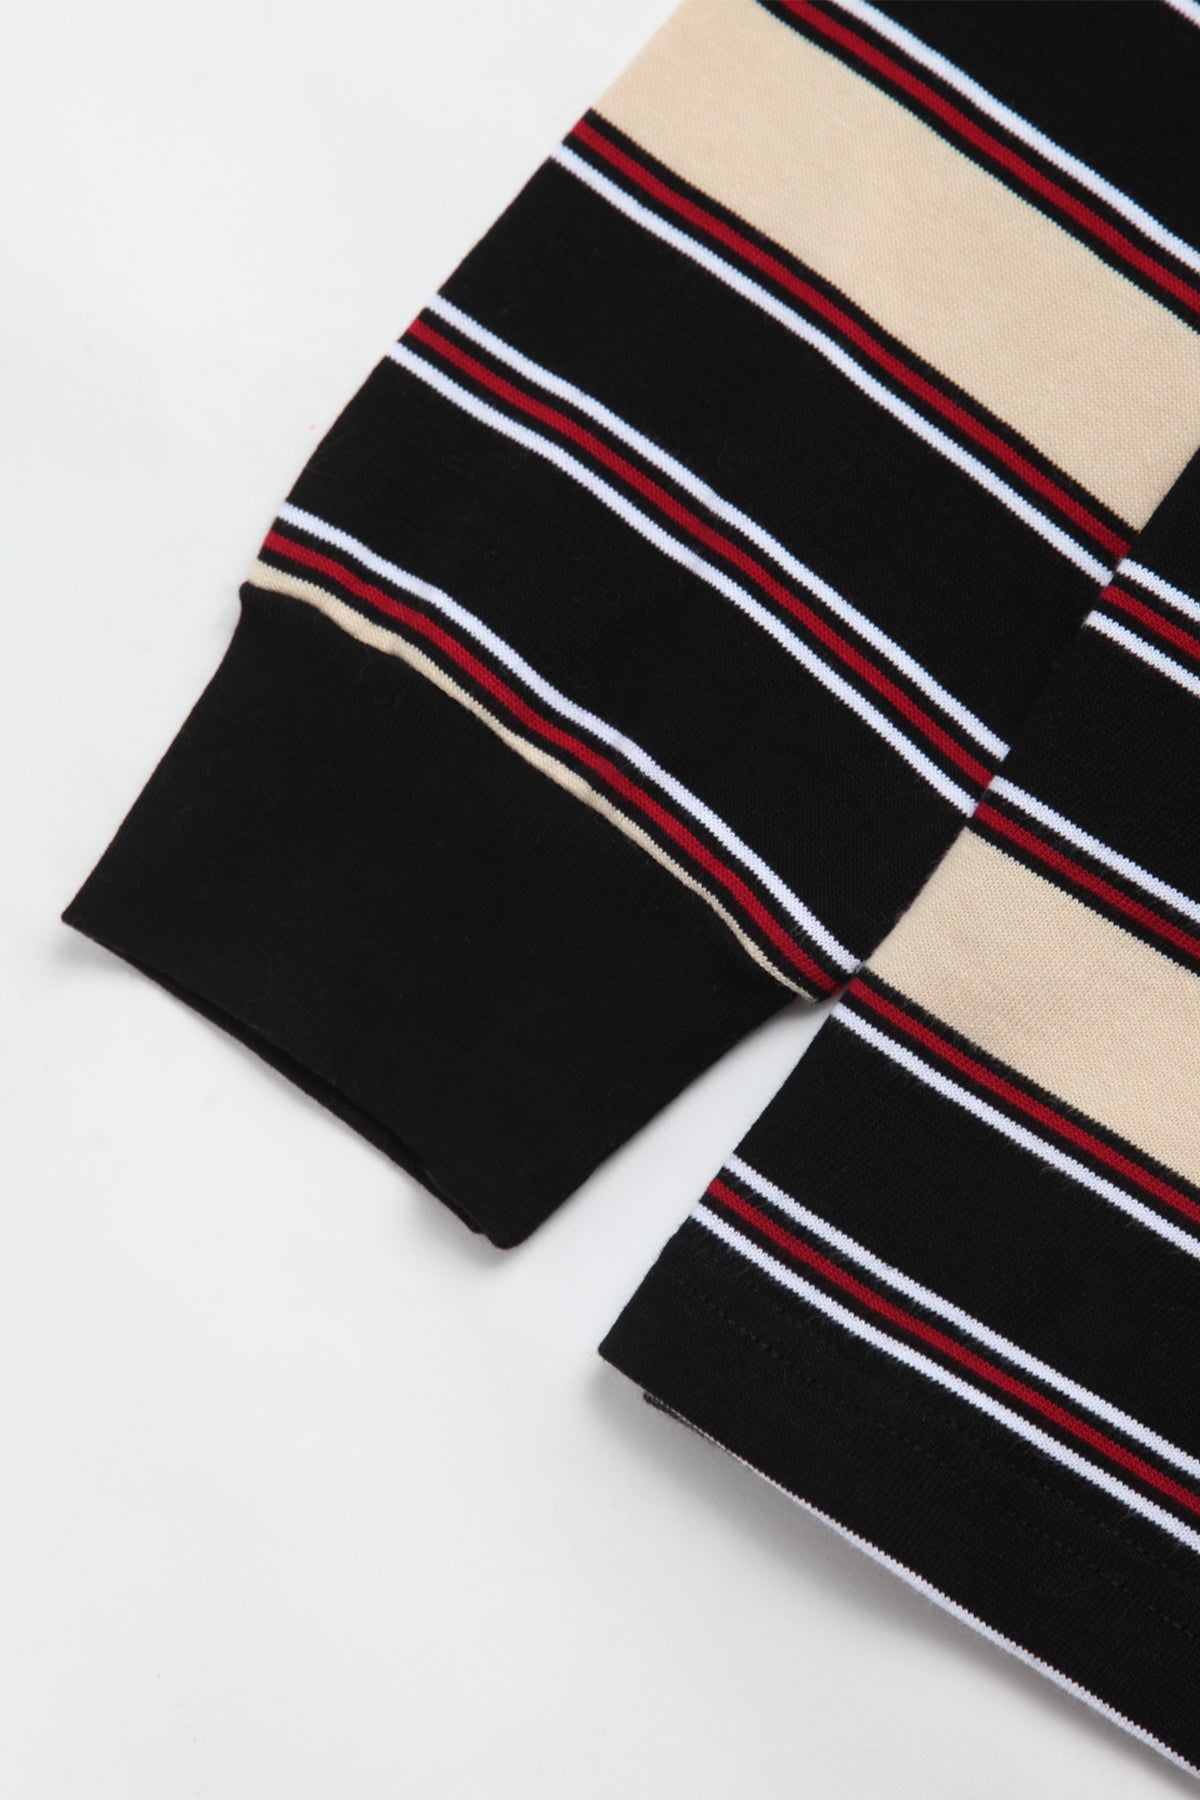 Okonkwo MFG - Long Sleeve Striped Tee - Black/Tan